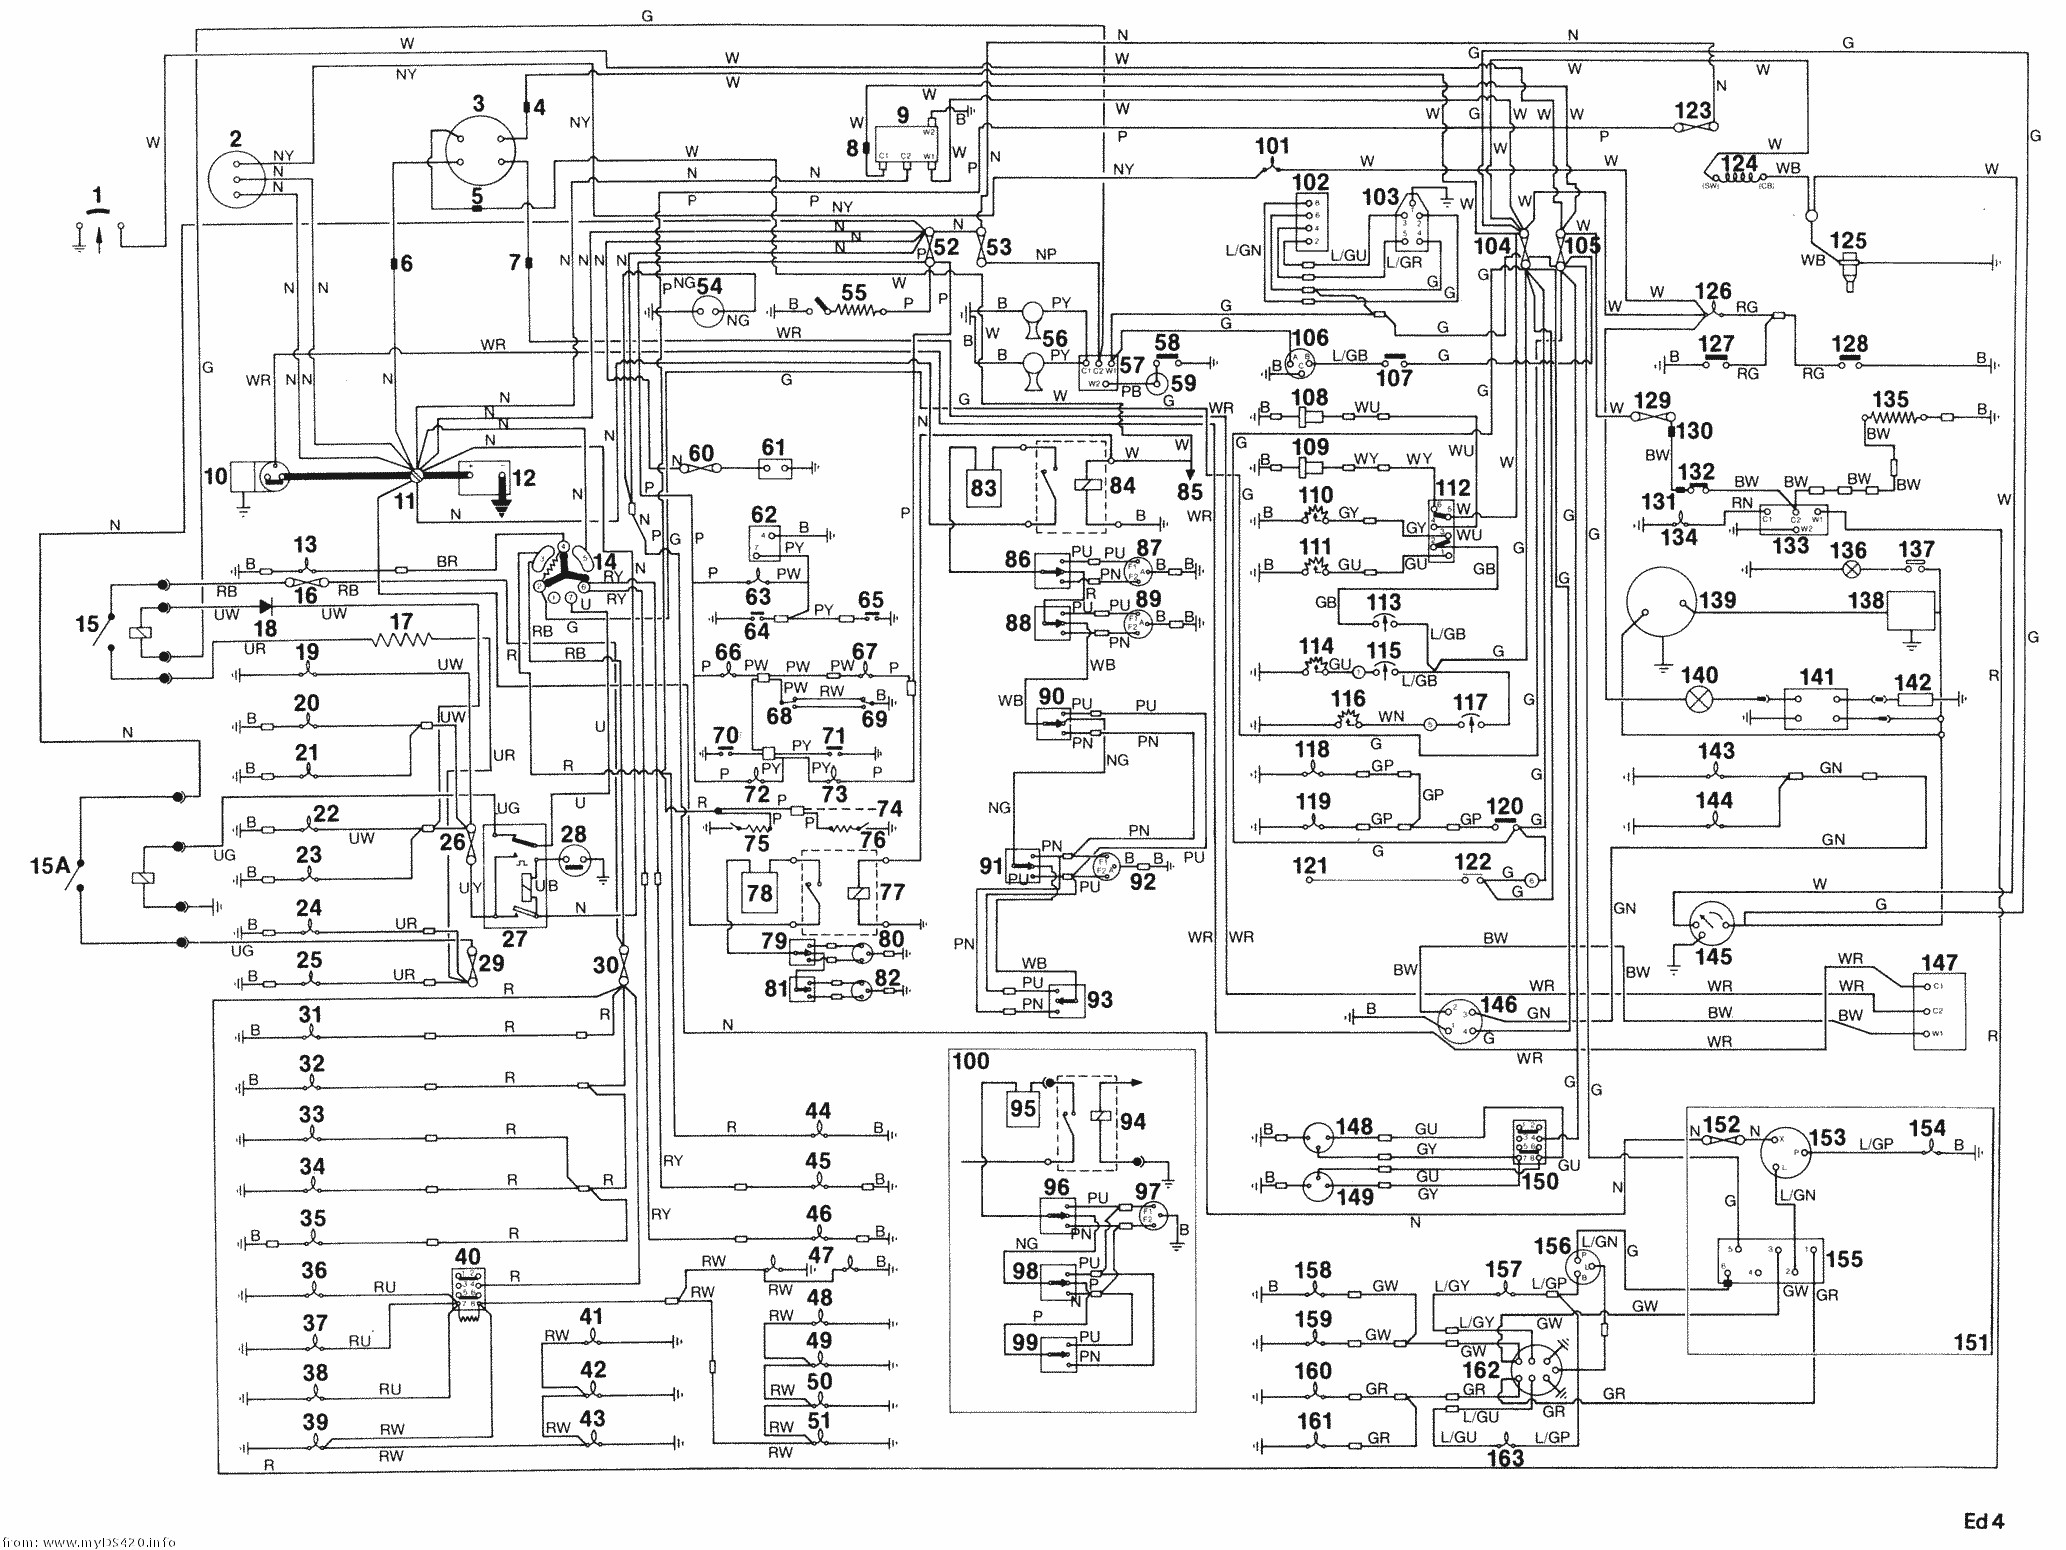 wiring diagram high res. (1986)